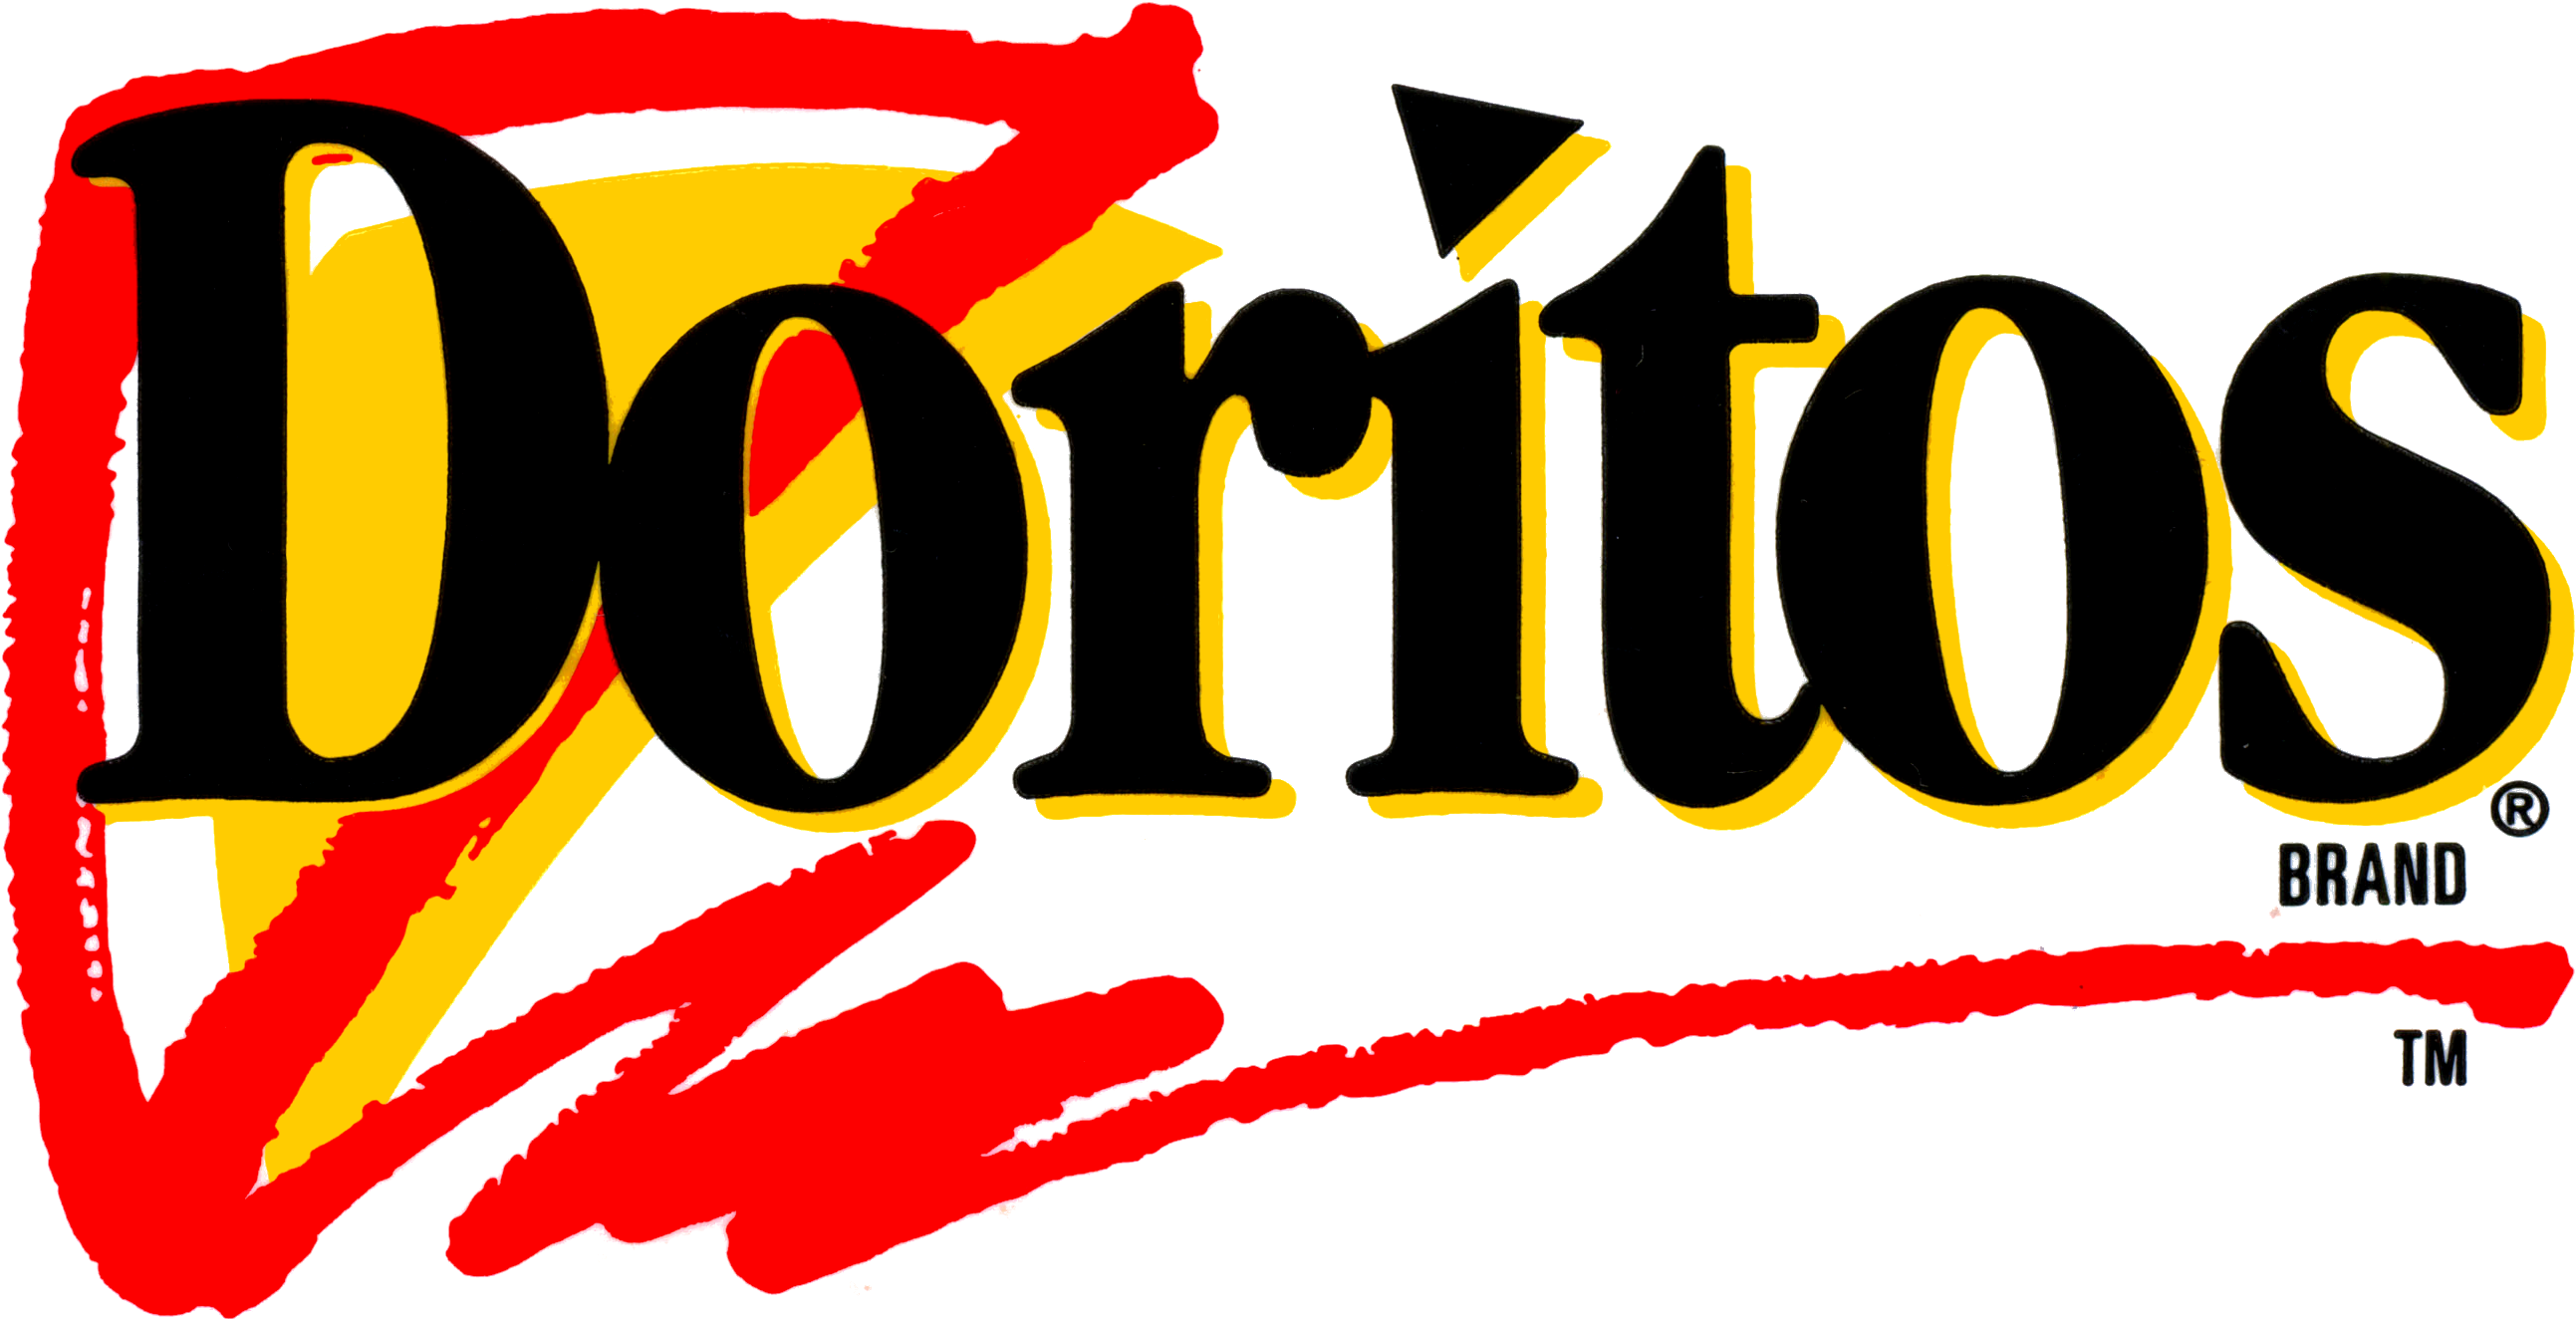 Doritos Logo - Doritos Tortilla Chips - Baked Spicy Sweet Chili (2591x1330)